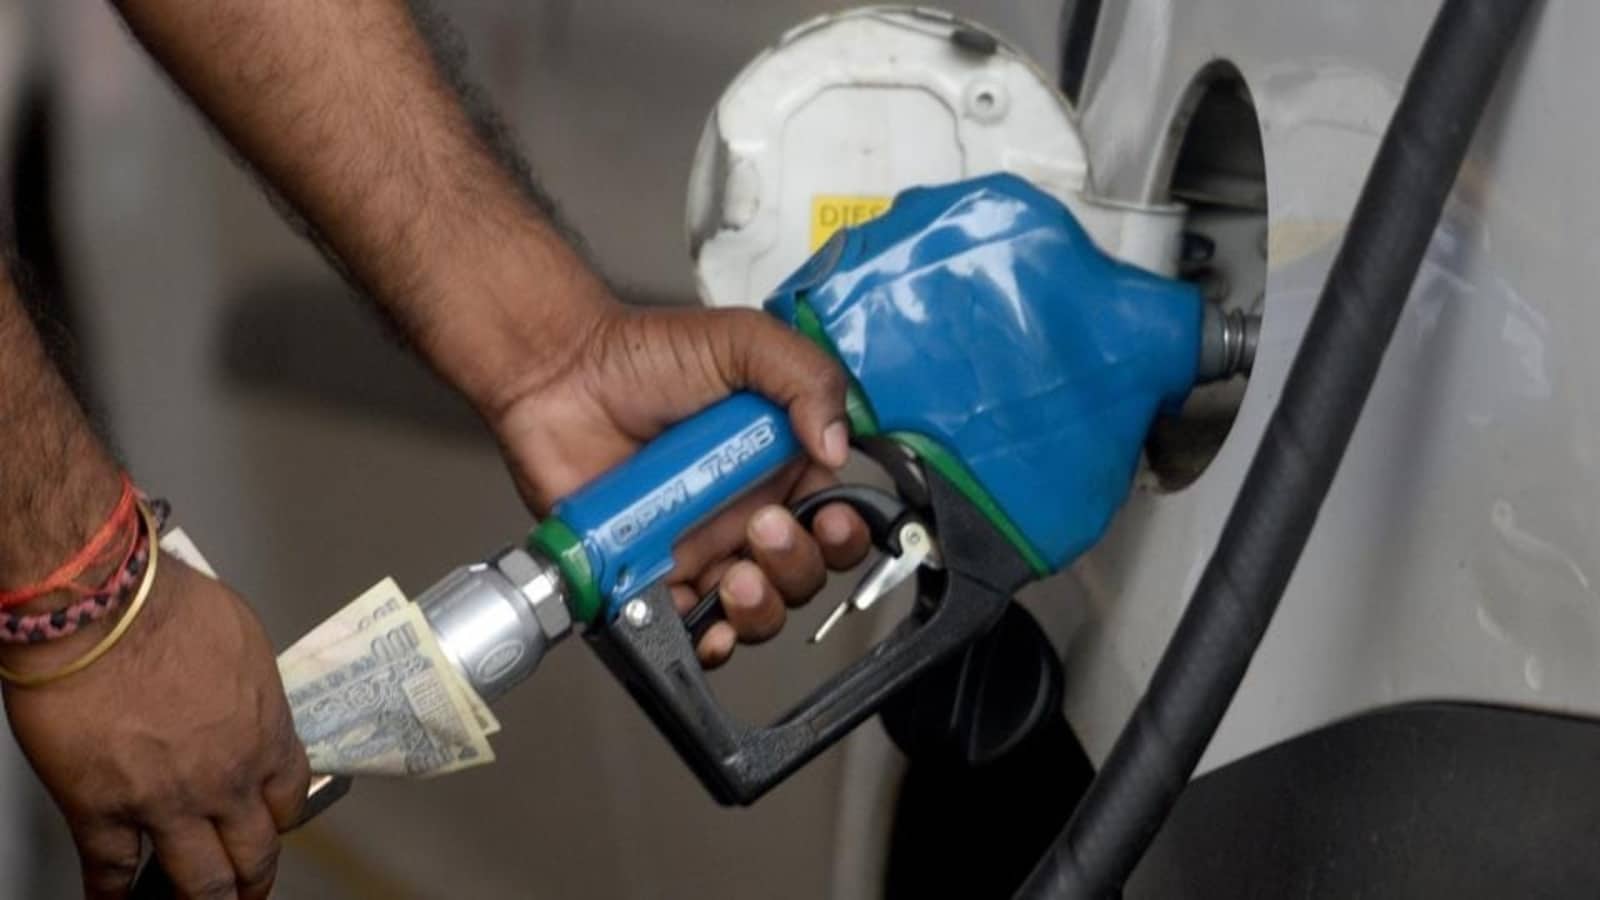 Fourth hike in diesel, petrol prices in India in a week